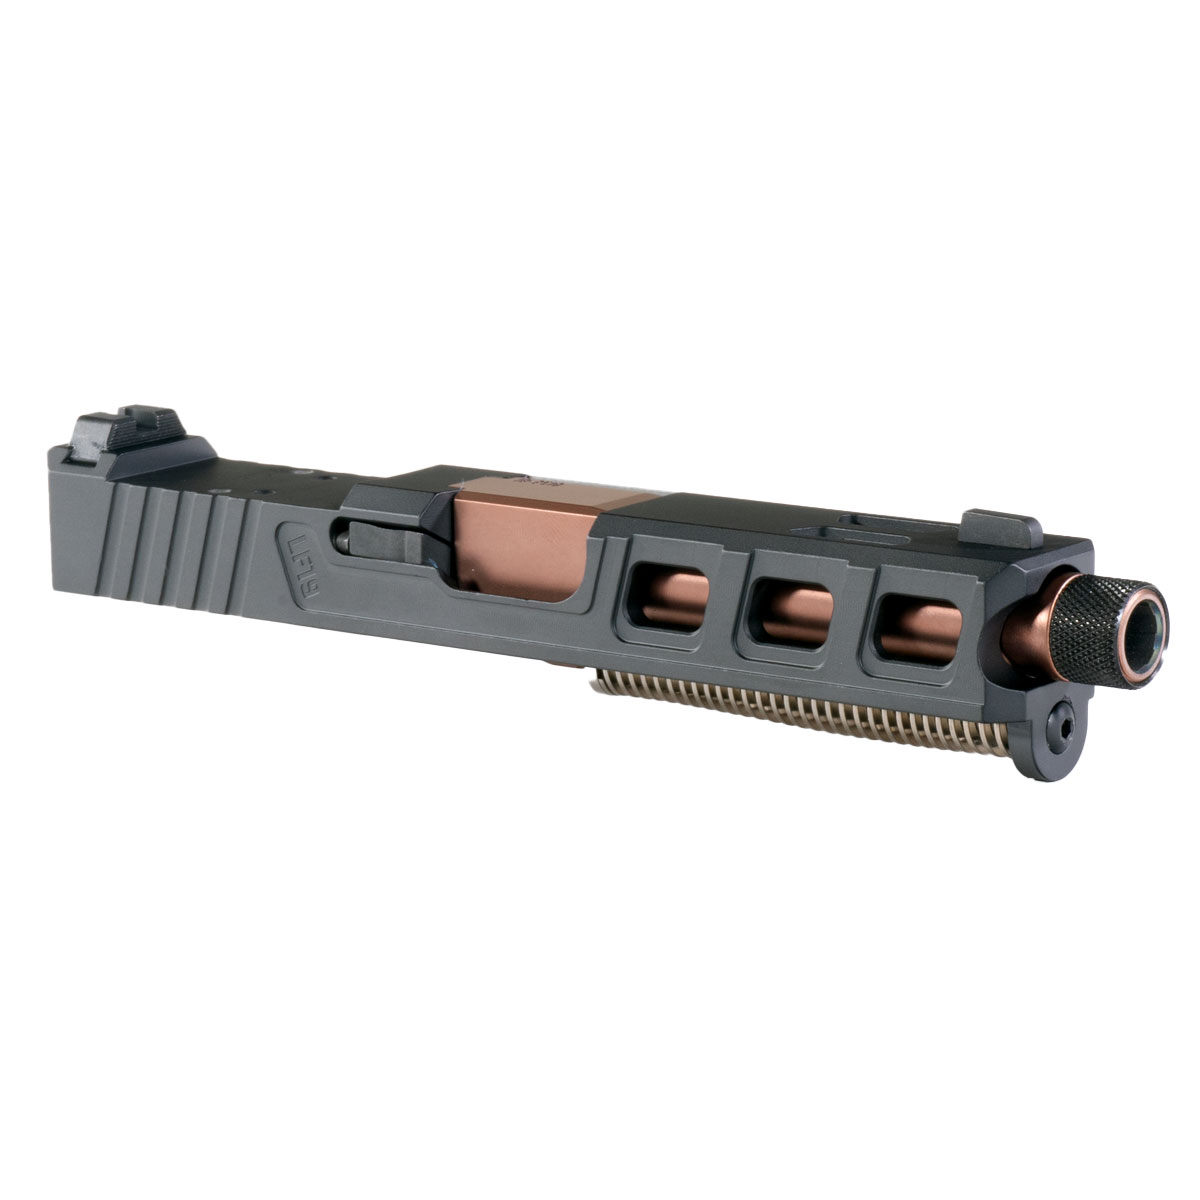 DTT 'Steel Stallion' 9mm Complete Slide Kit - Glock 19 Gen 1-3 Compatible